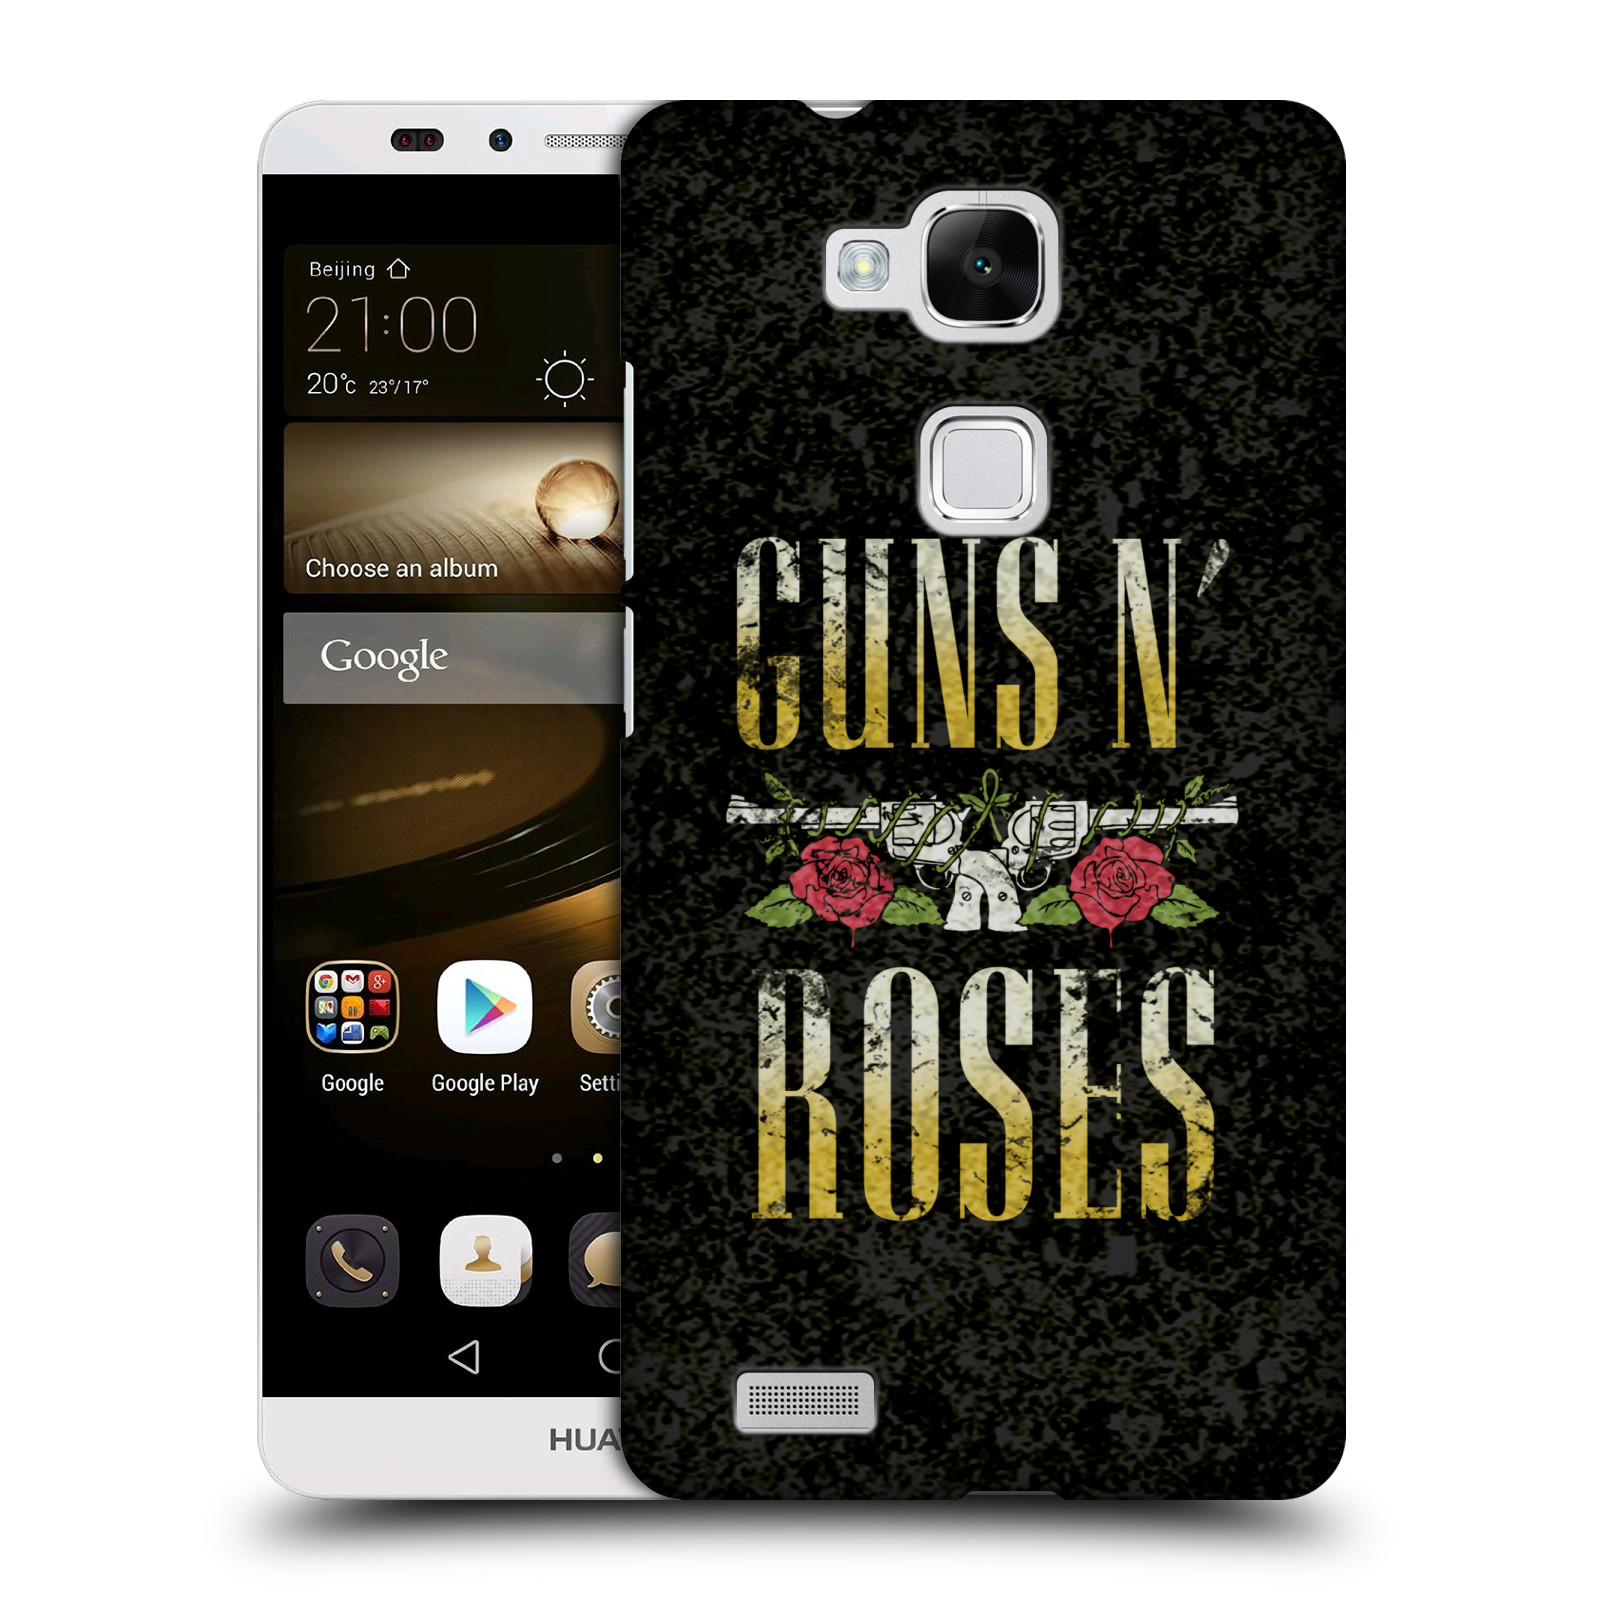 HEAD CASE plastový obal na mobil Huawei Mate 7 hudební skupina Guns N Roses text